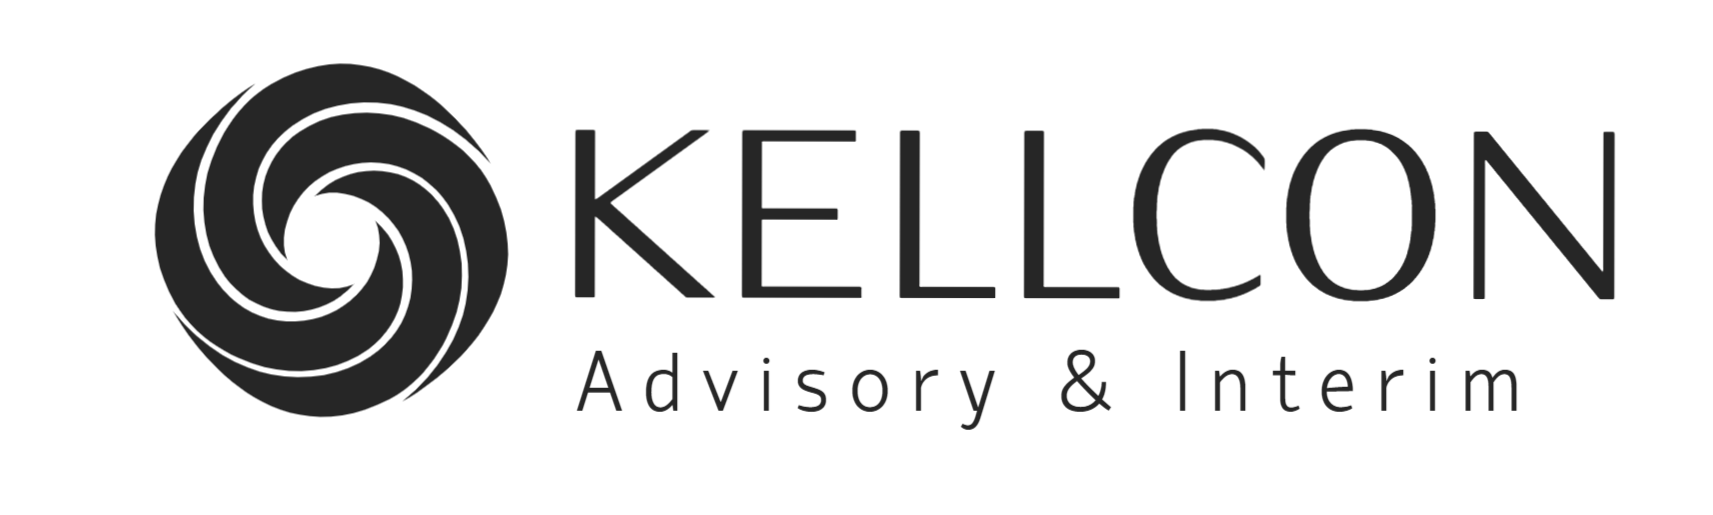 Kellcon Advisory & Interim GmbH